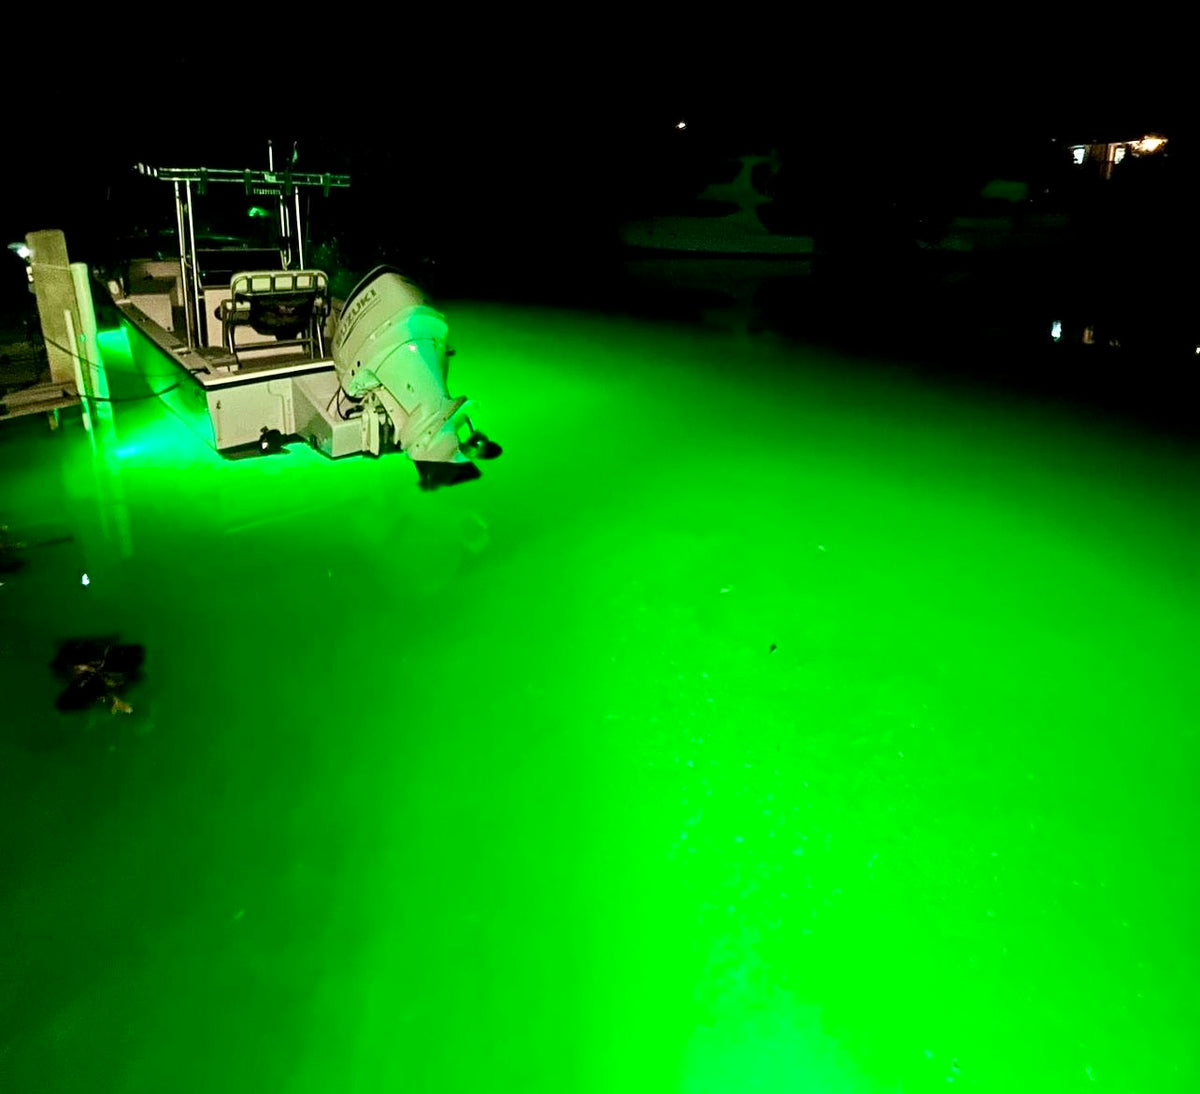  Dock Fishing Lights